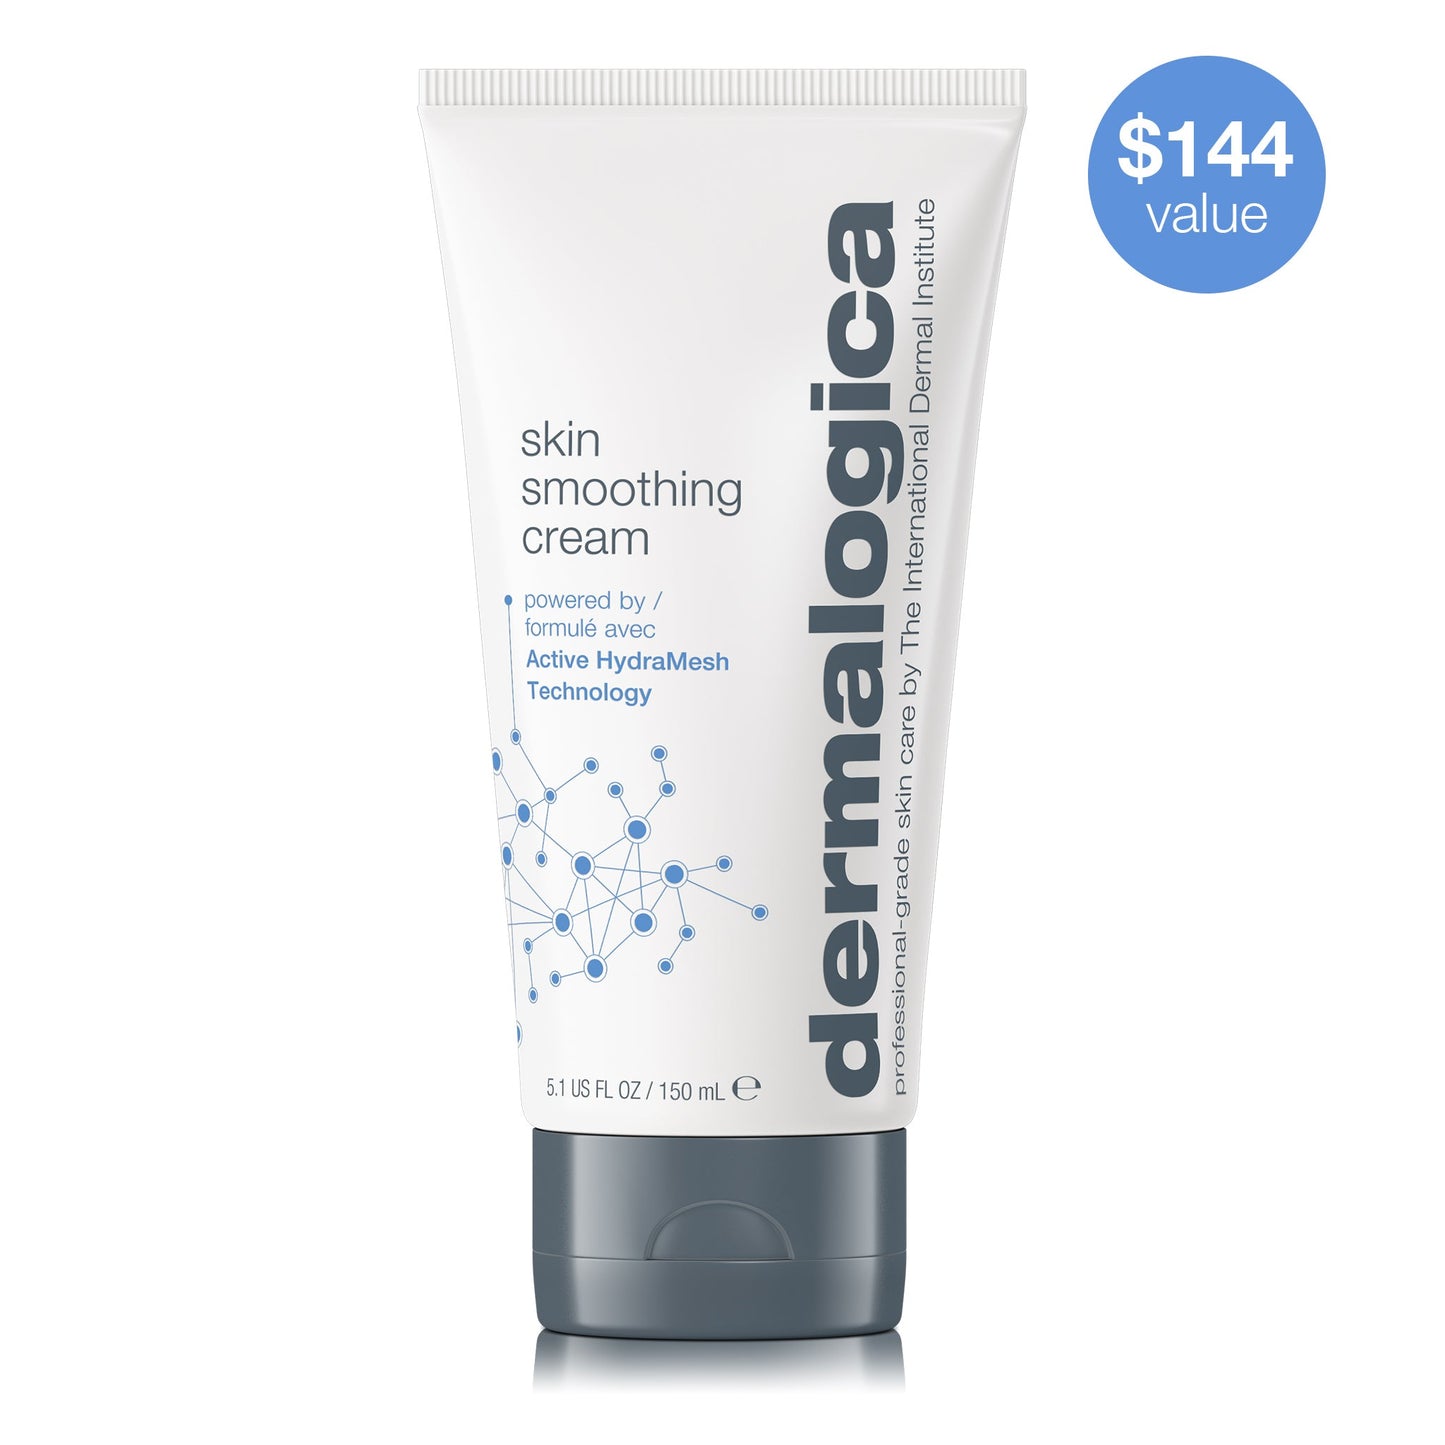 skin smoothing cream jumbo value